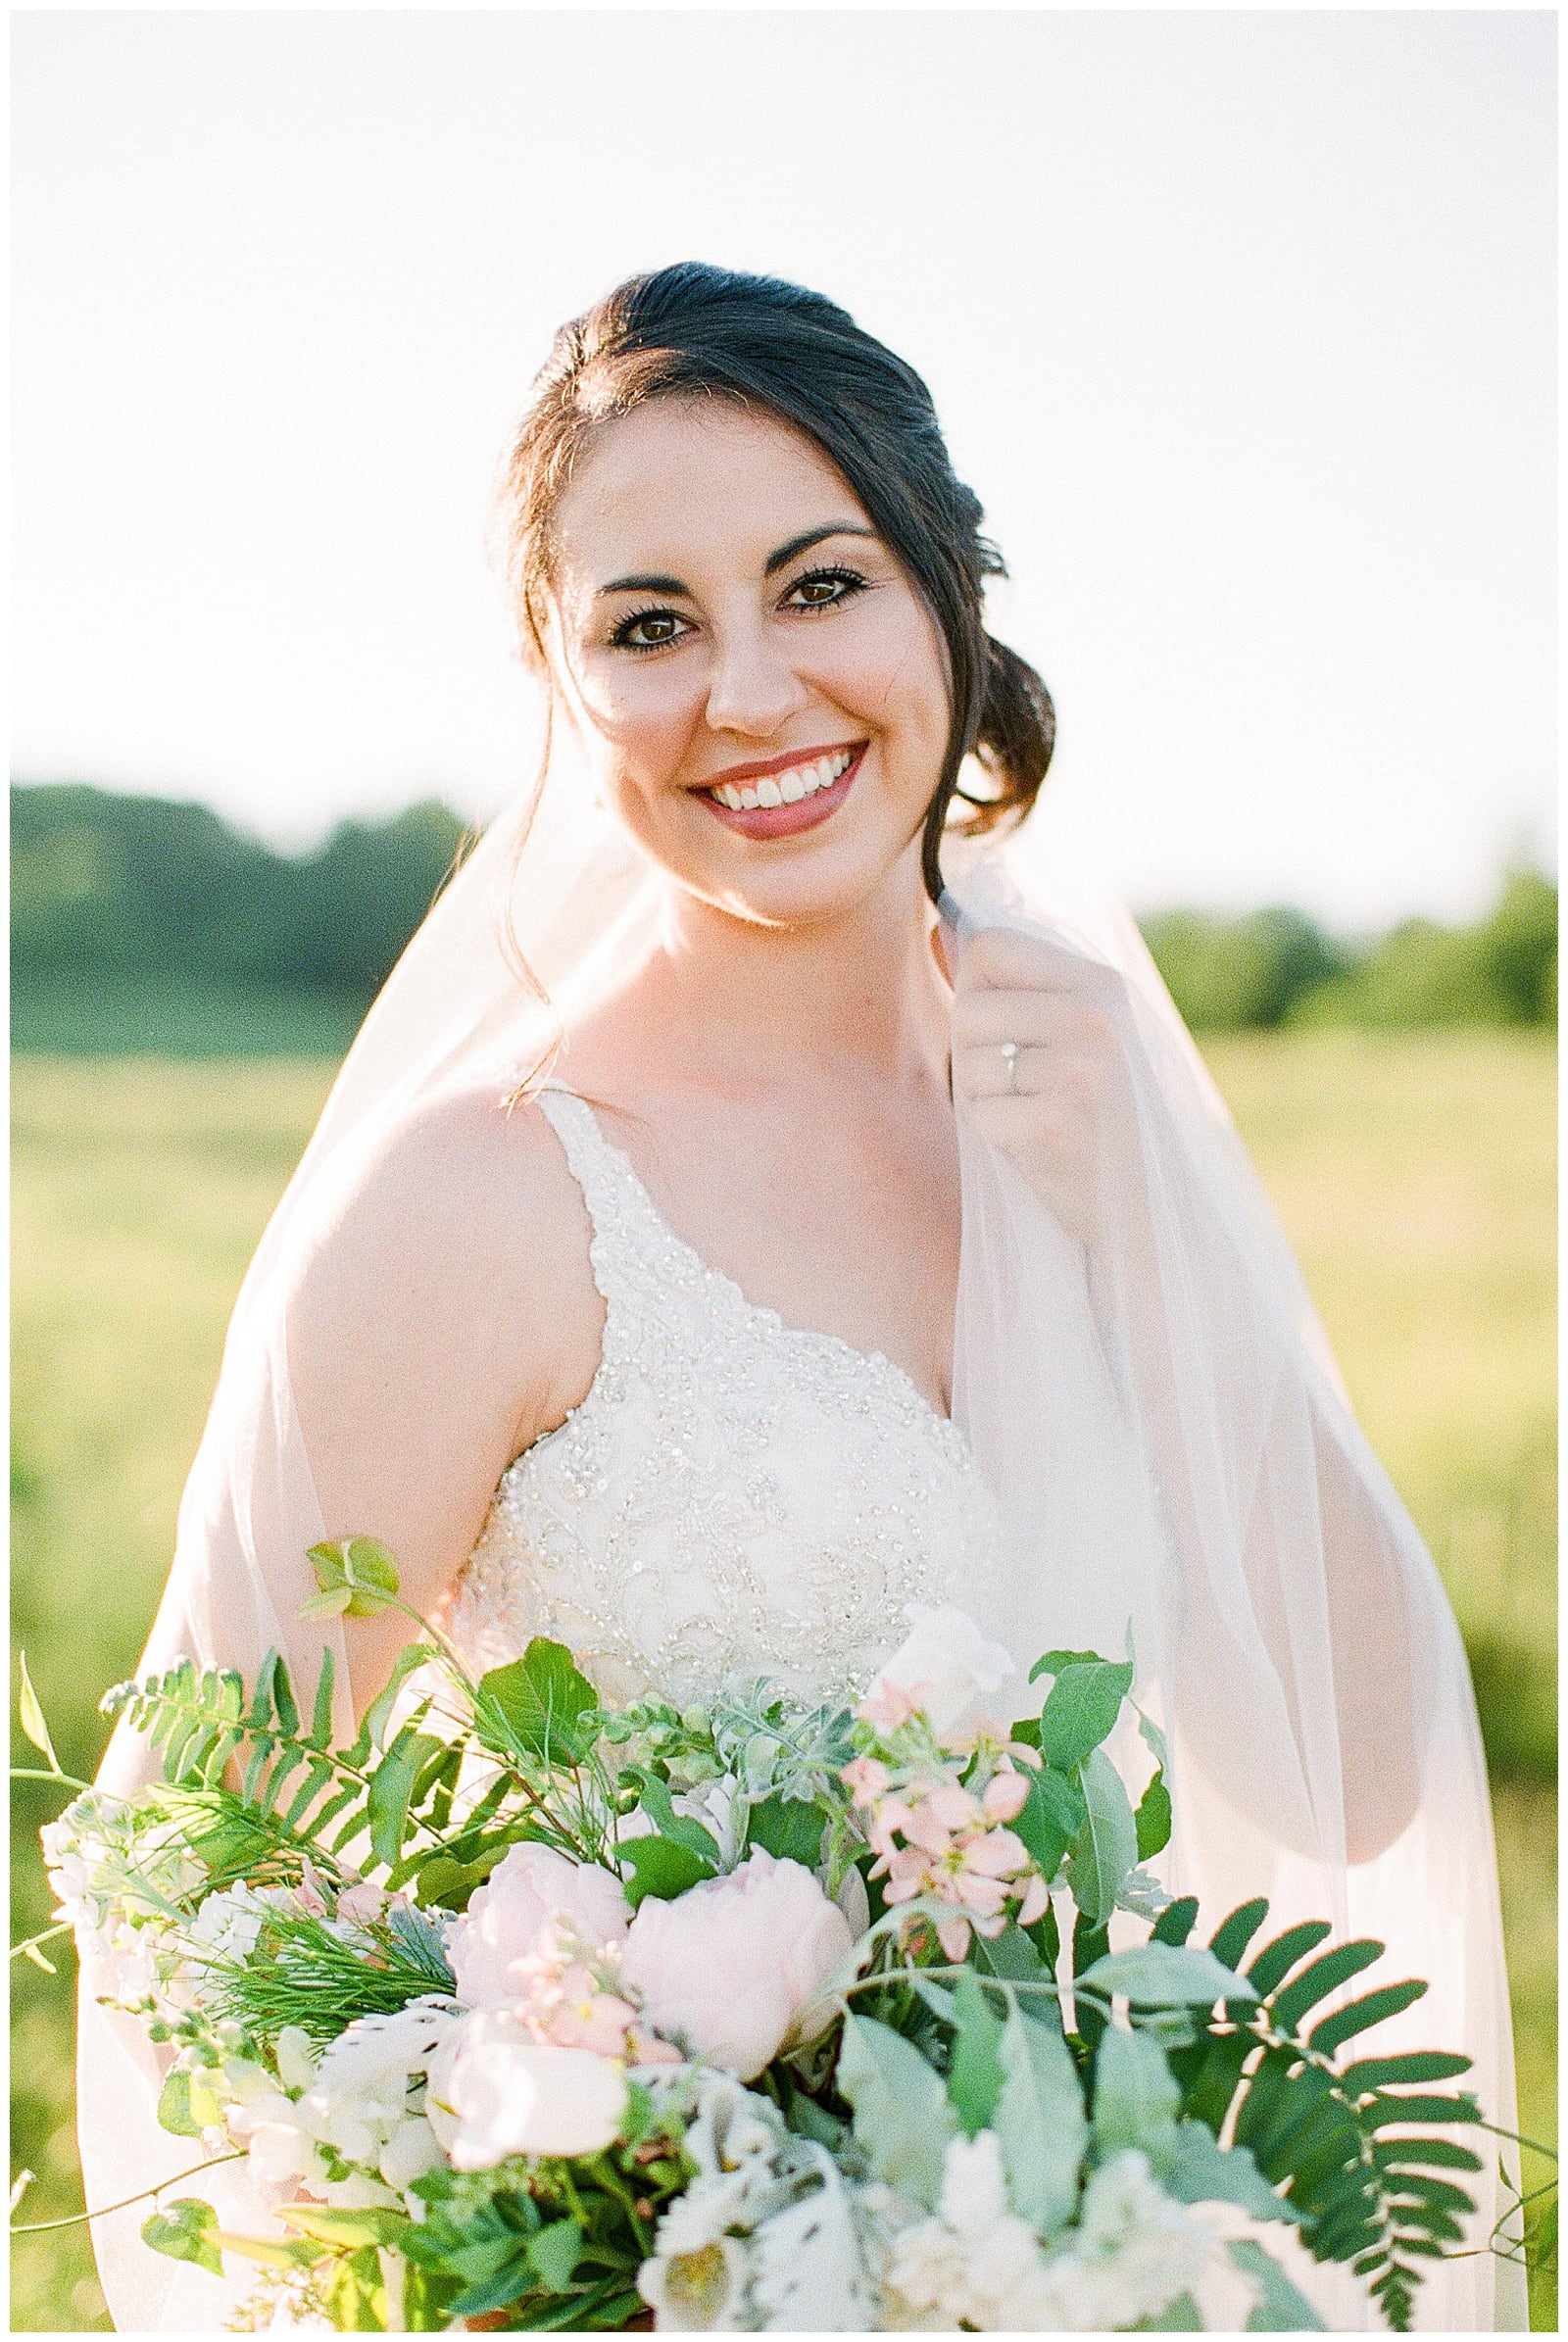 Danielle-Defayette-Photography-Middle-Fork-Barn-Abingdon-Wedding-2020_0014.jpg